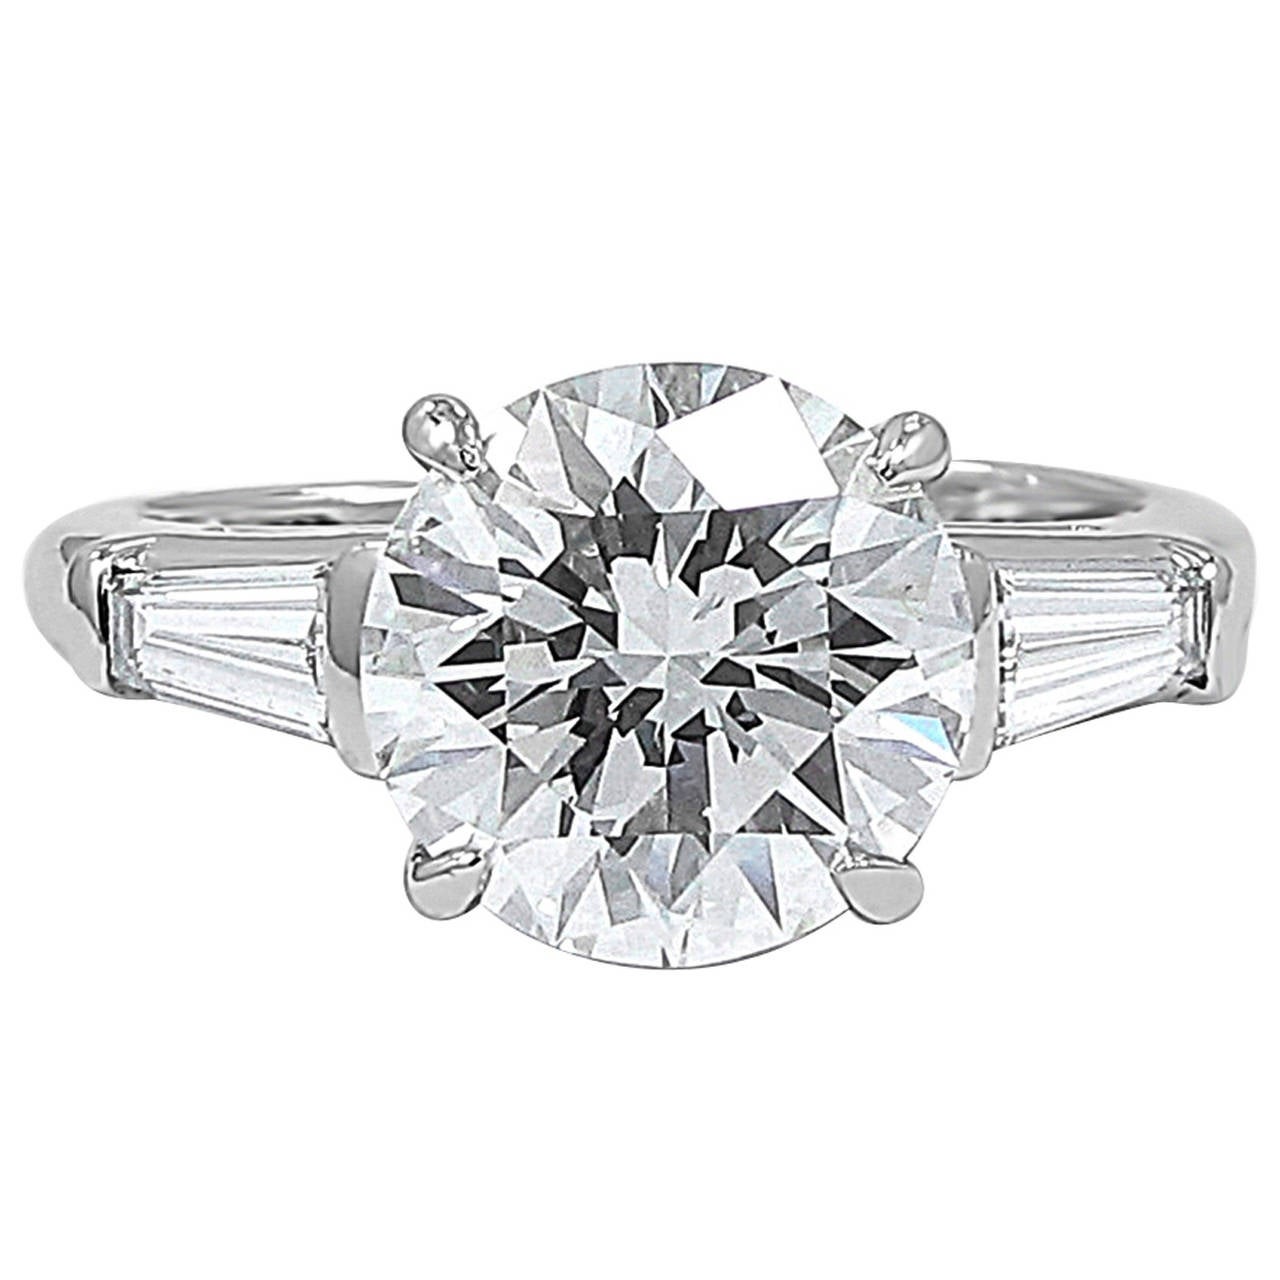 Tiffany & Co. 3.37 Carat Diamond Platinum Engagement Ring